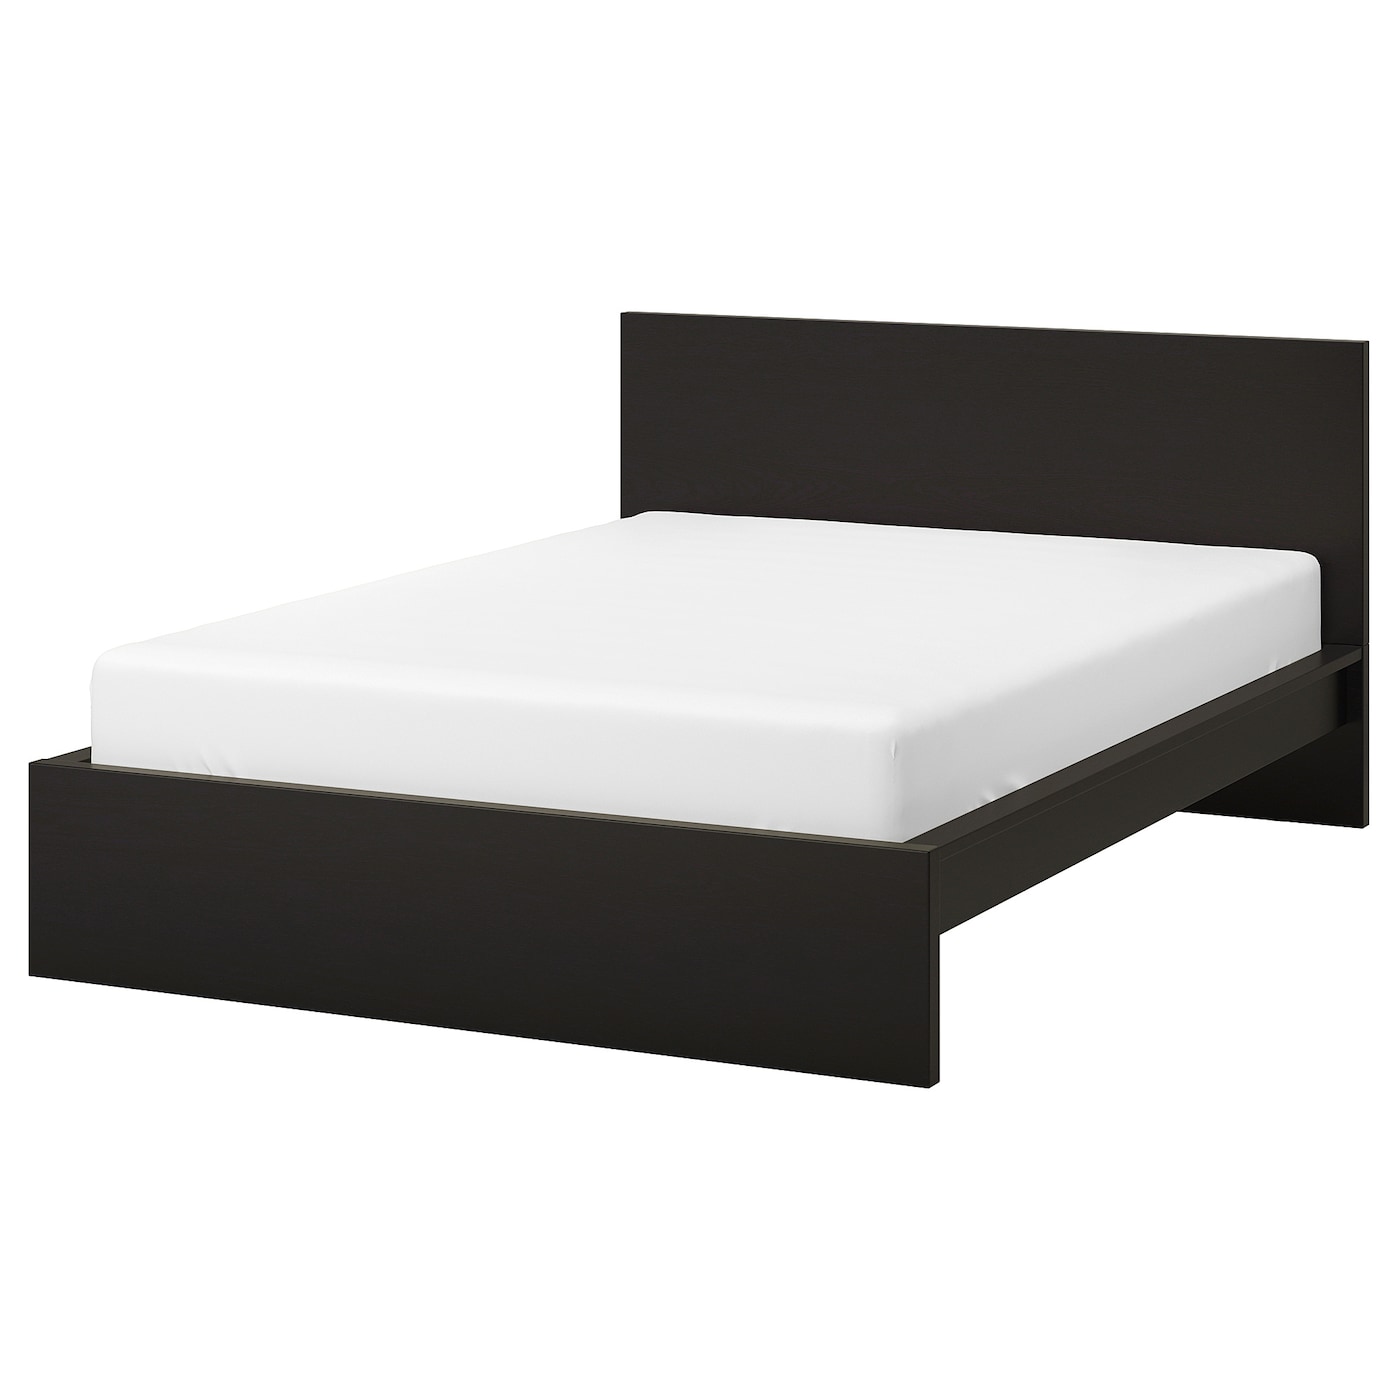 Каркас кровати - IKEA MALM, 200х140 см, черно-корчневый, МАЛЬМ ИКЕА